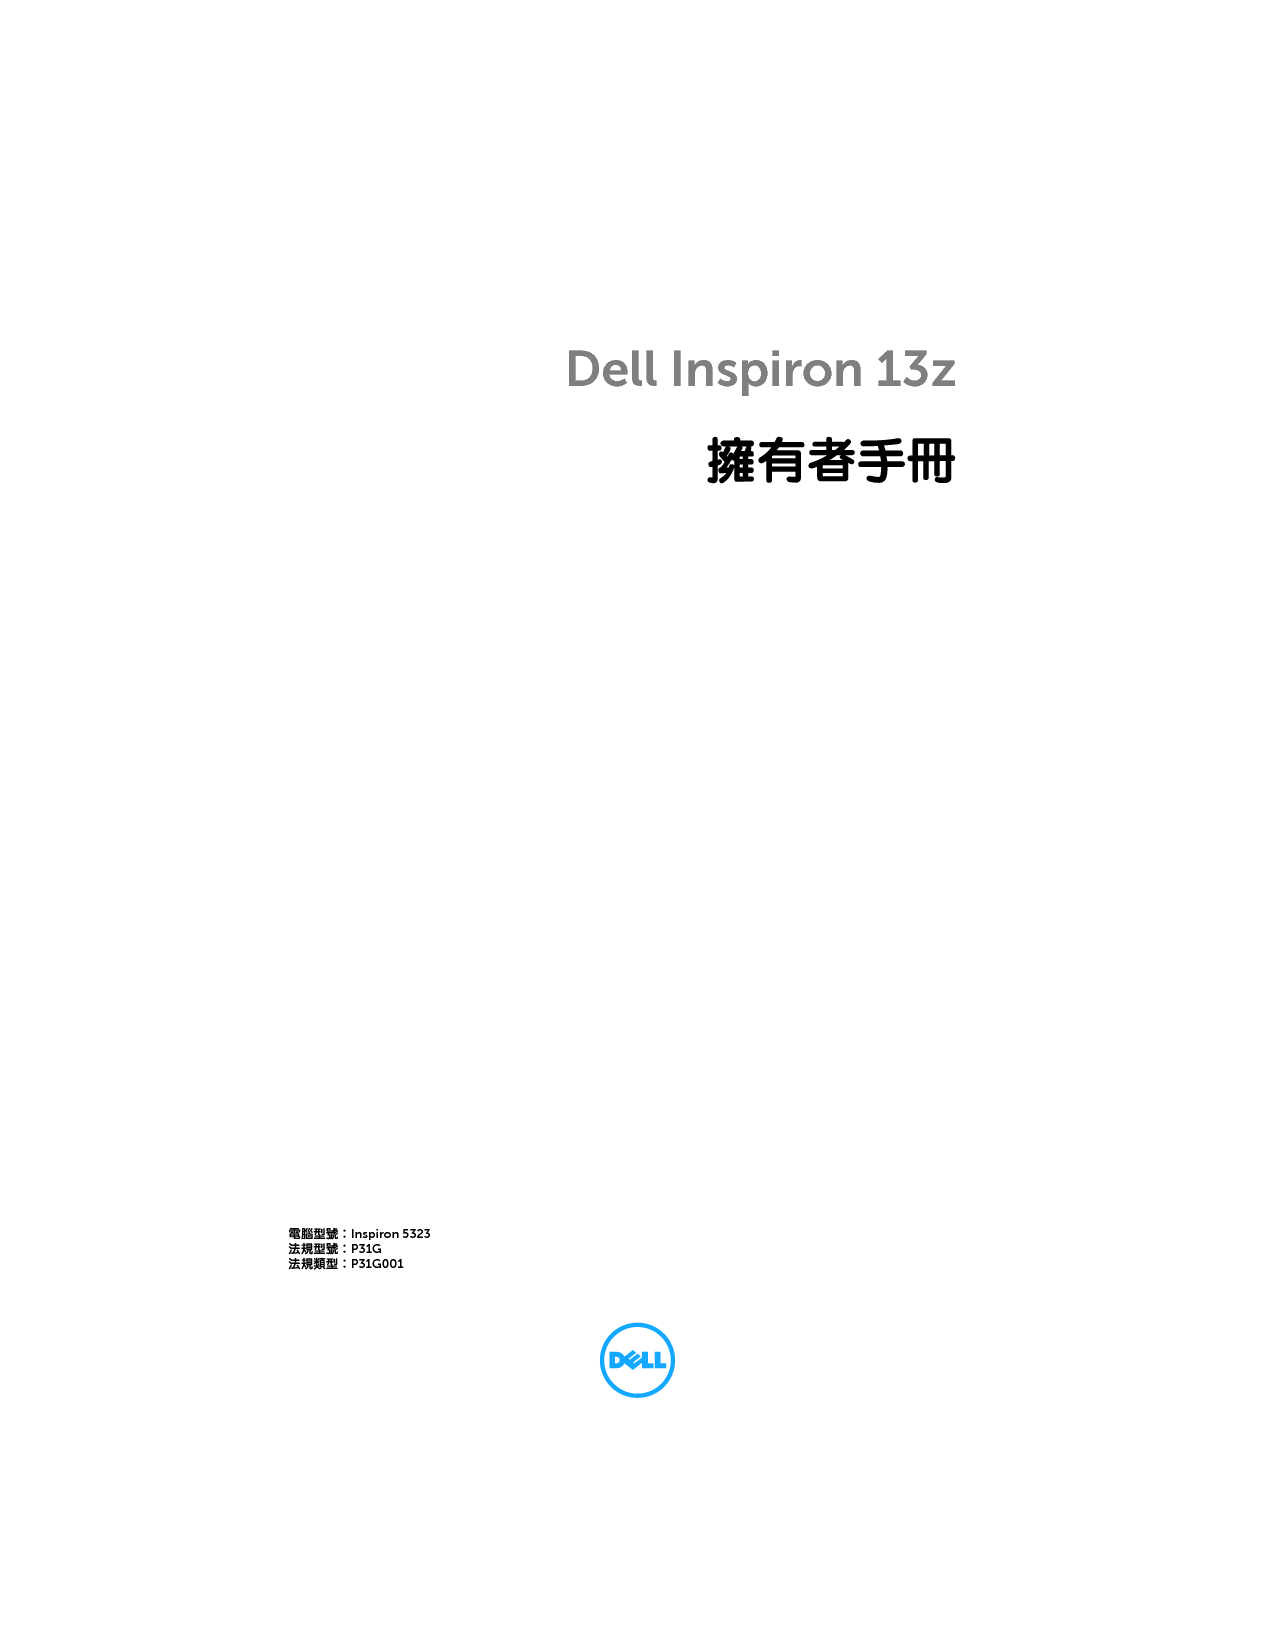 戴尔 Dell Inspiron 13Z 5323 用户手册 封面